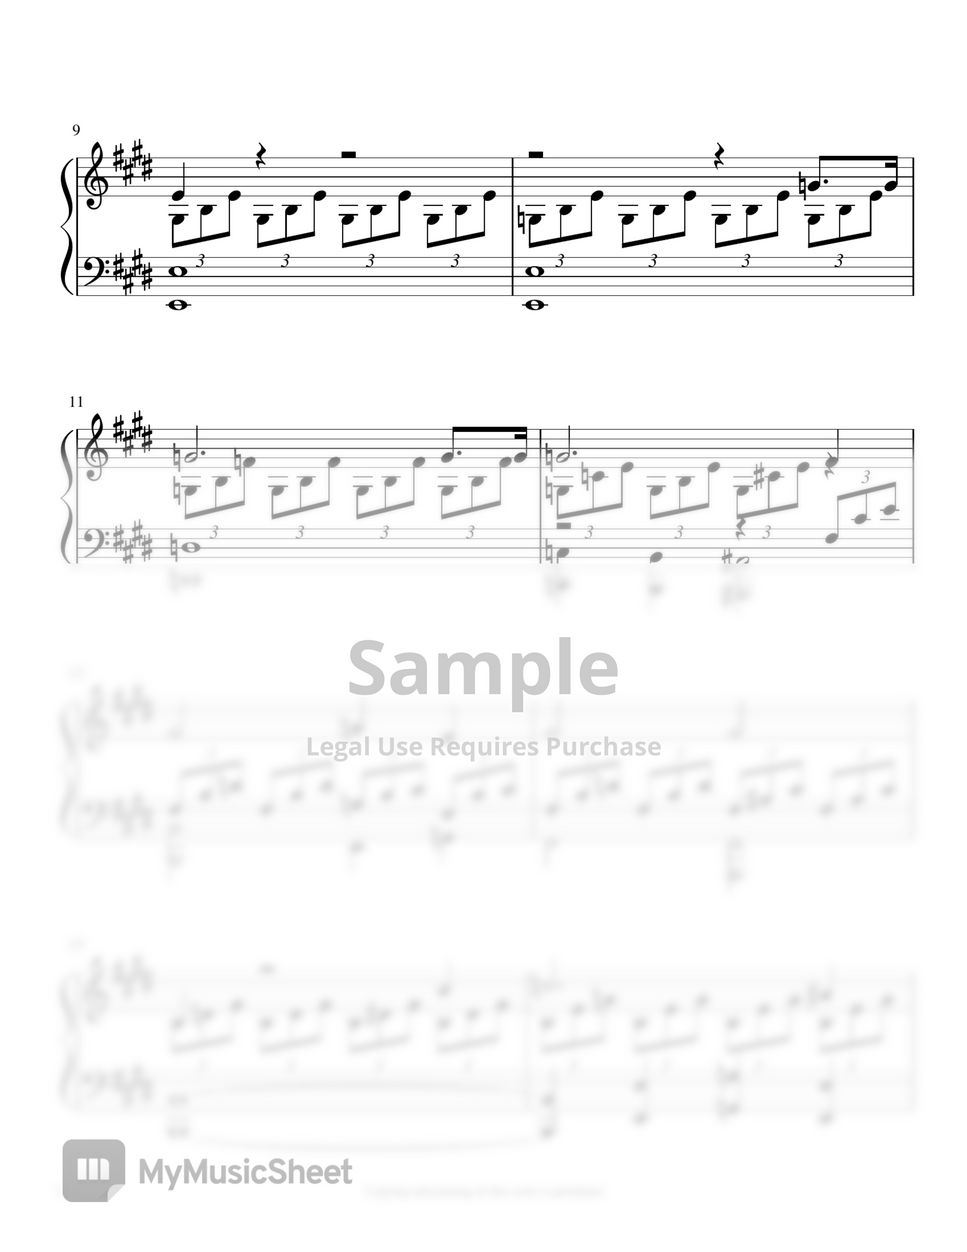 Ludwig Van Beethoven - Opus 27 No 2 Moonlight Sonata 1st movement by Ludwig Van Beethoven